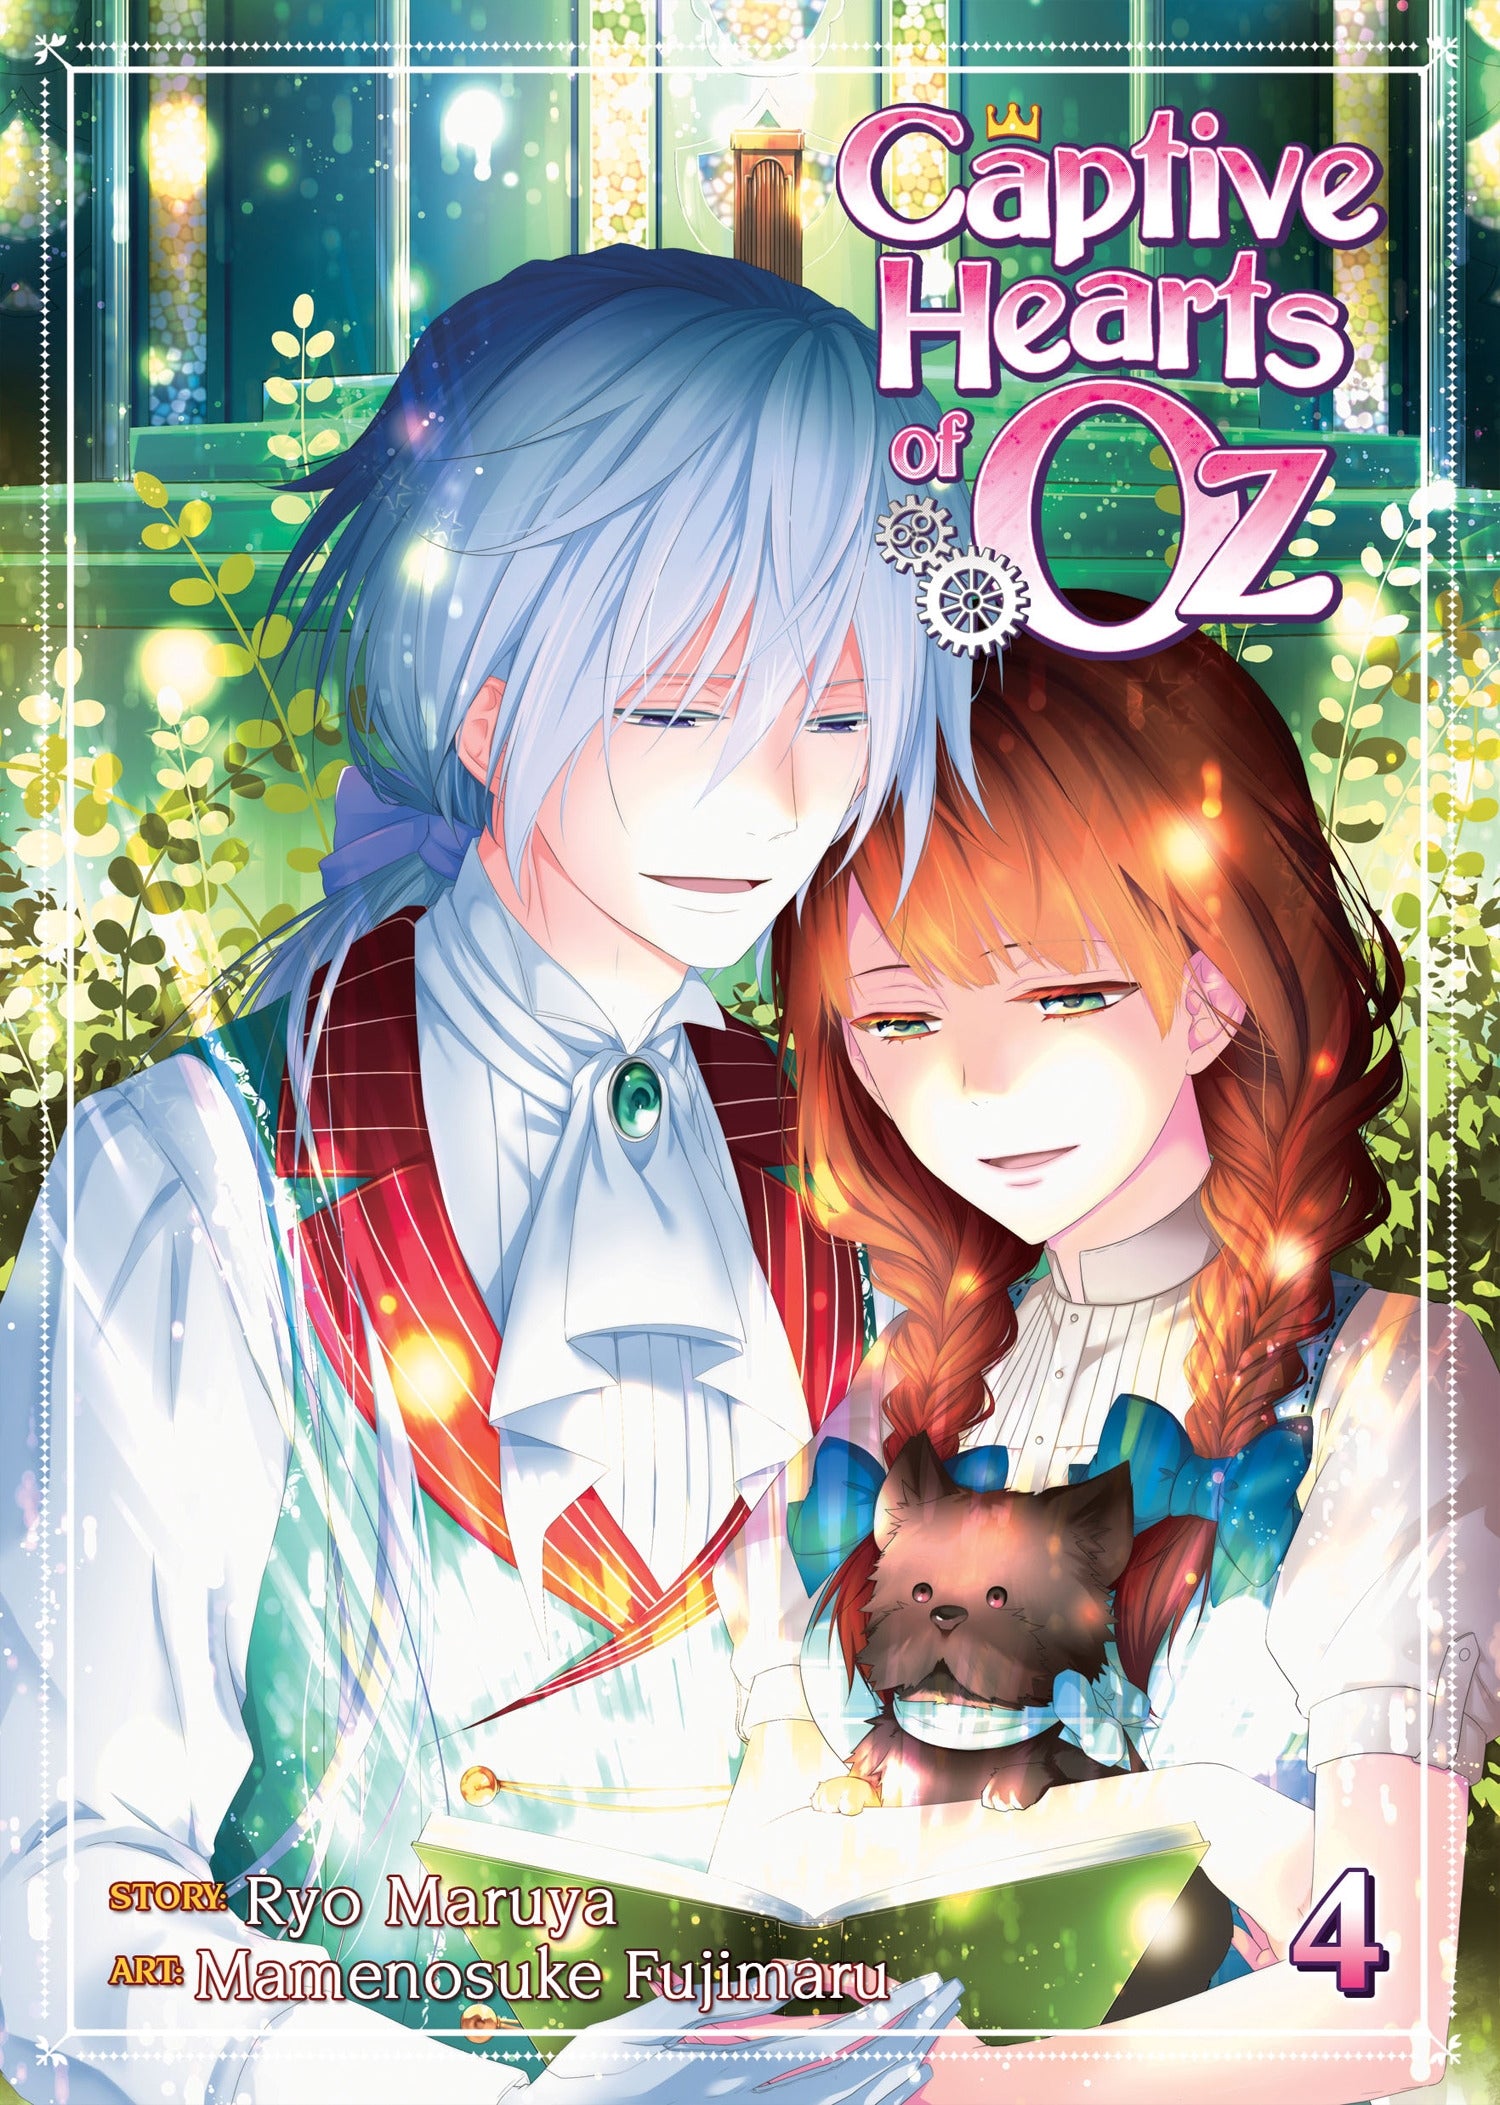 Captive Hearts of Oz Vol. 4 - Manga Warehouse